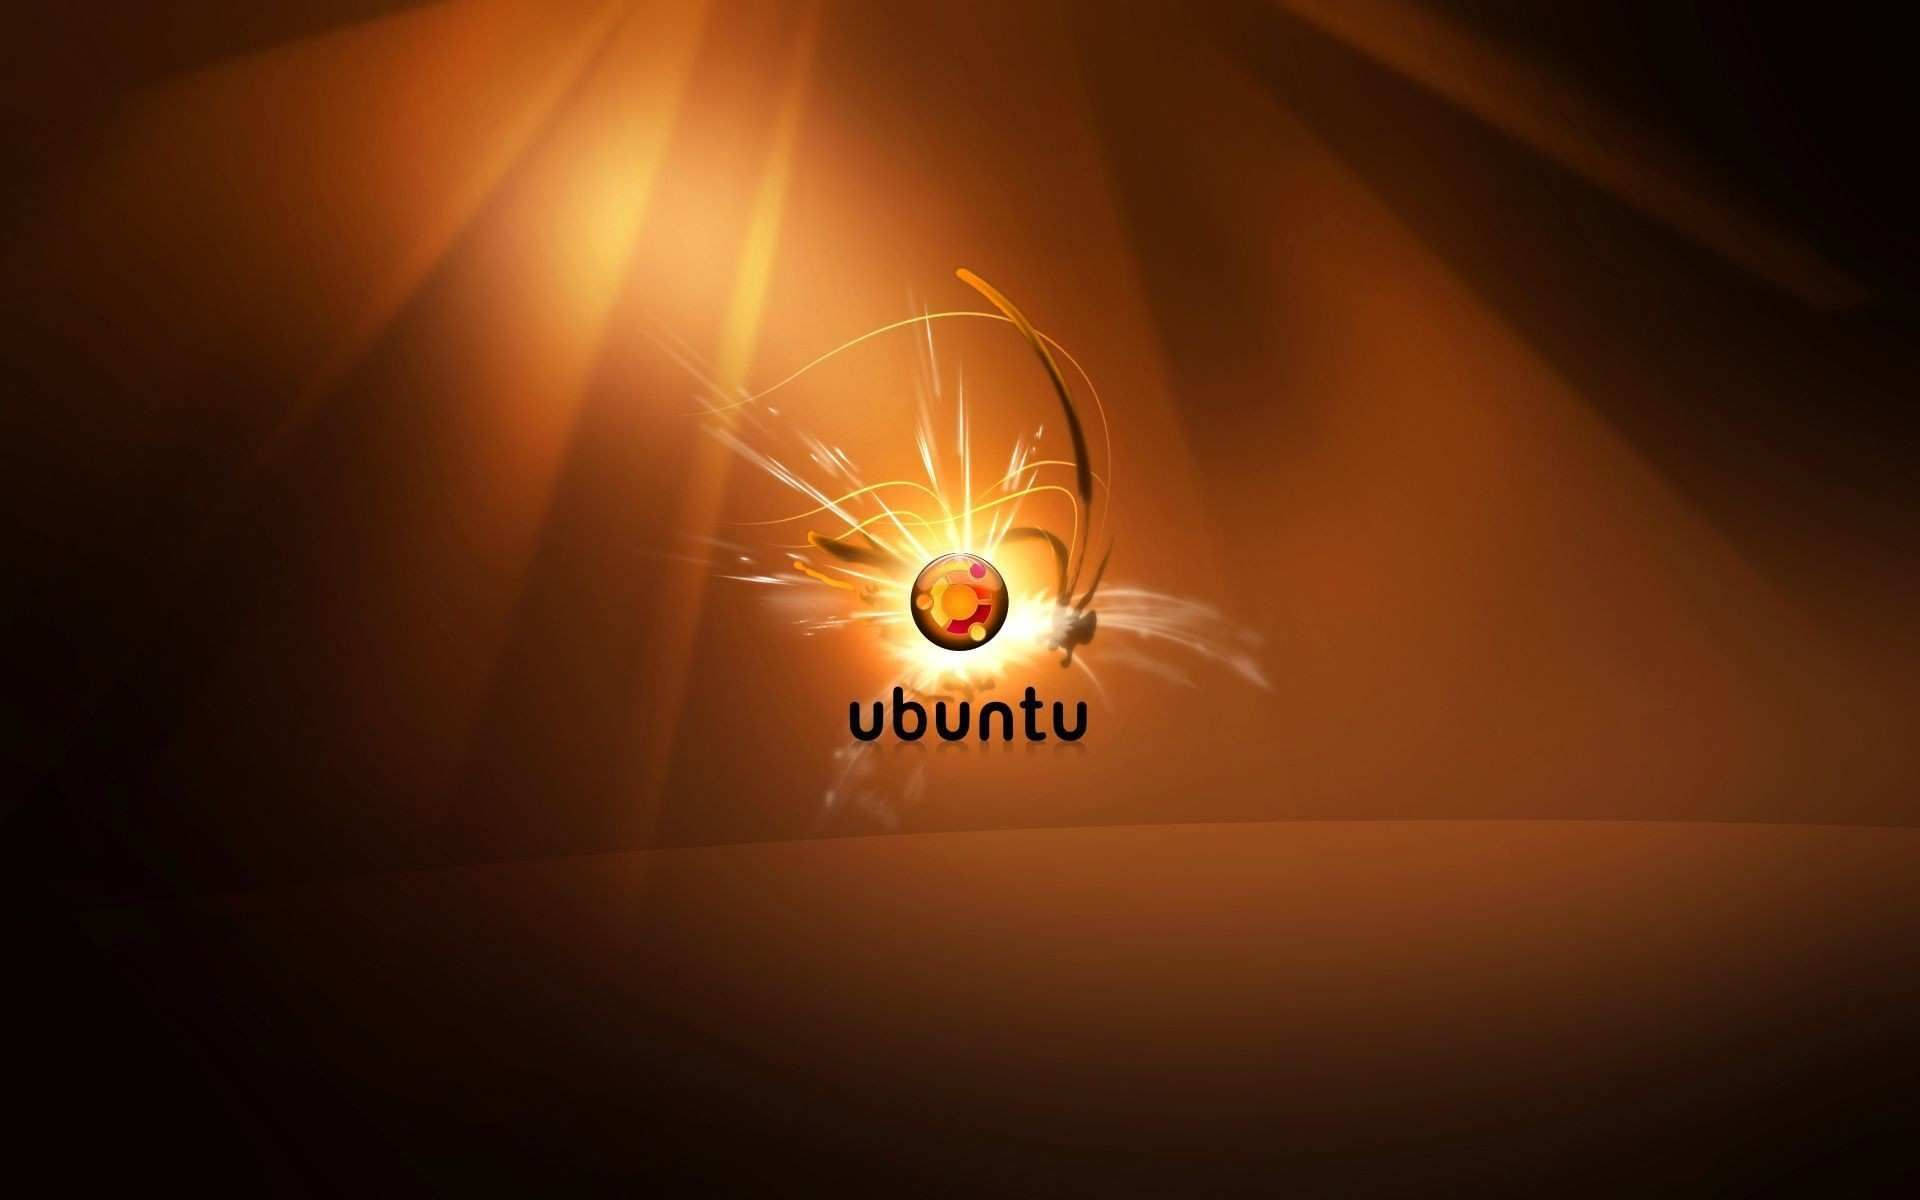 Ubuntu In Golden Flashing Logo